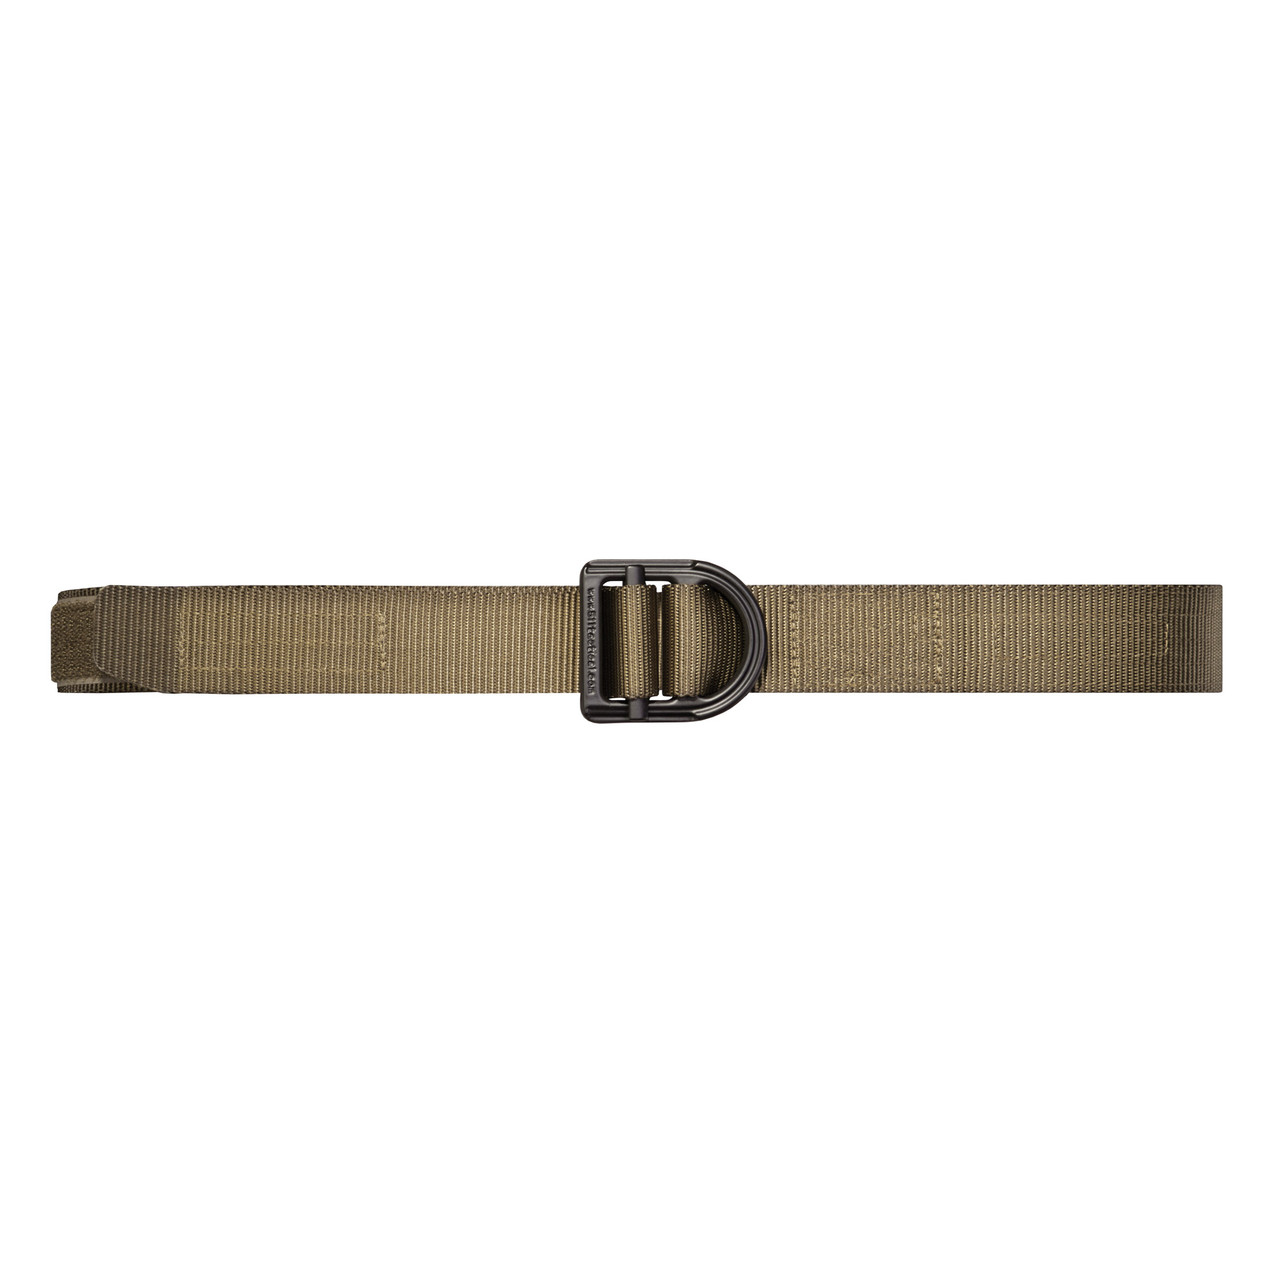 511 Tactical 1.5 inch Trainer Belt